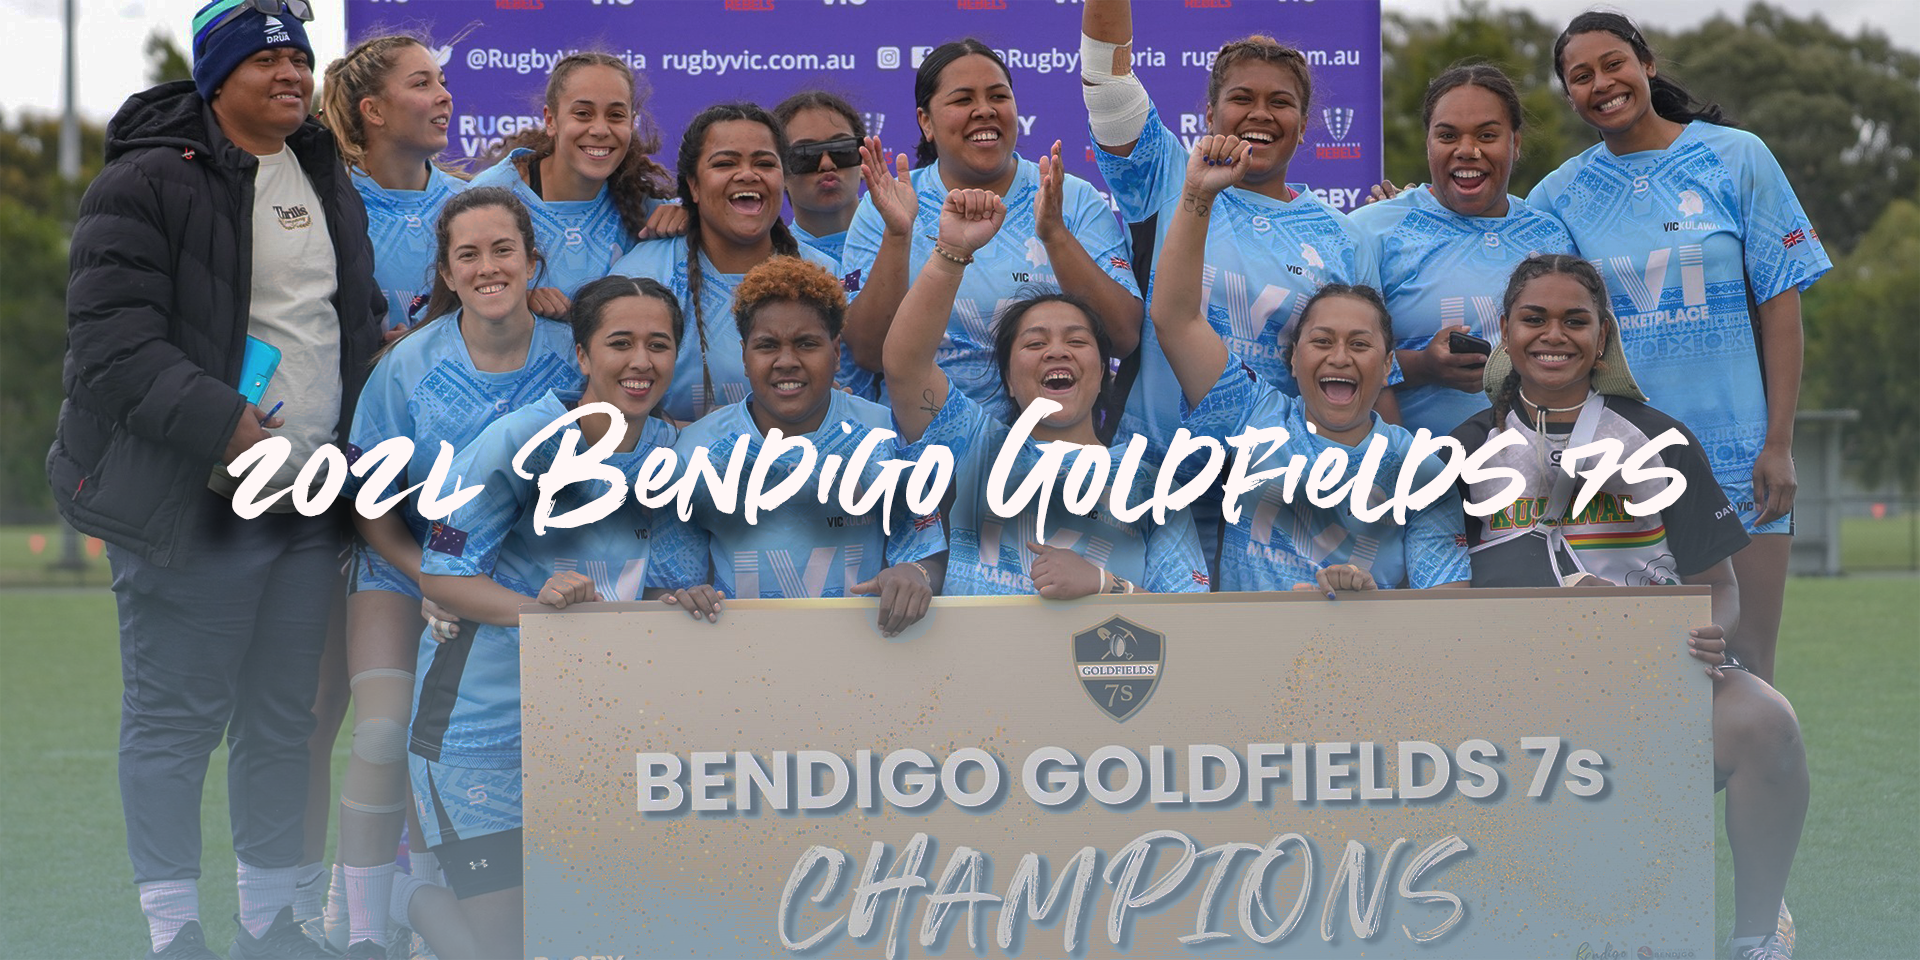 Bendigo Goldfields 7s